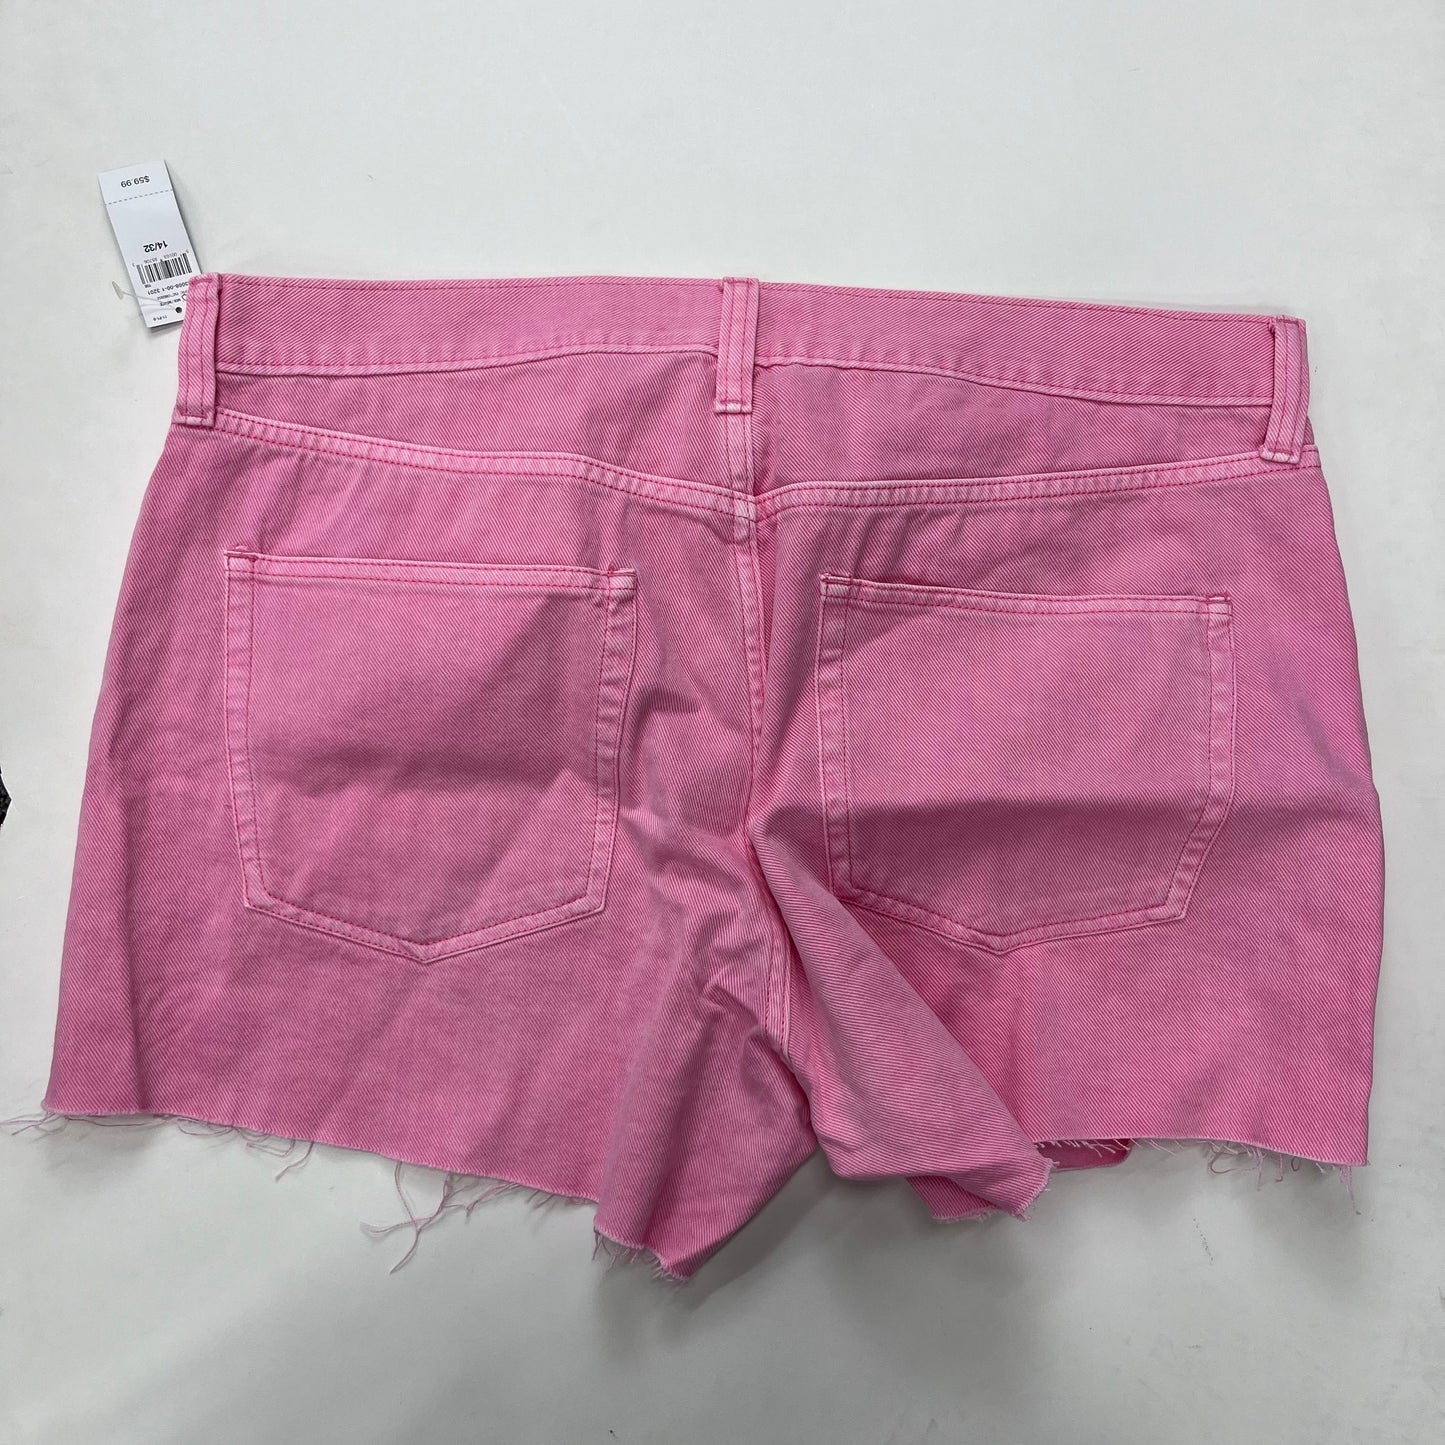 Pink Shorts Gap, Size 14